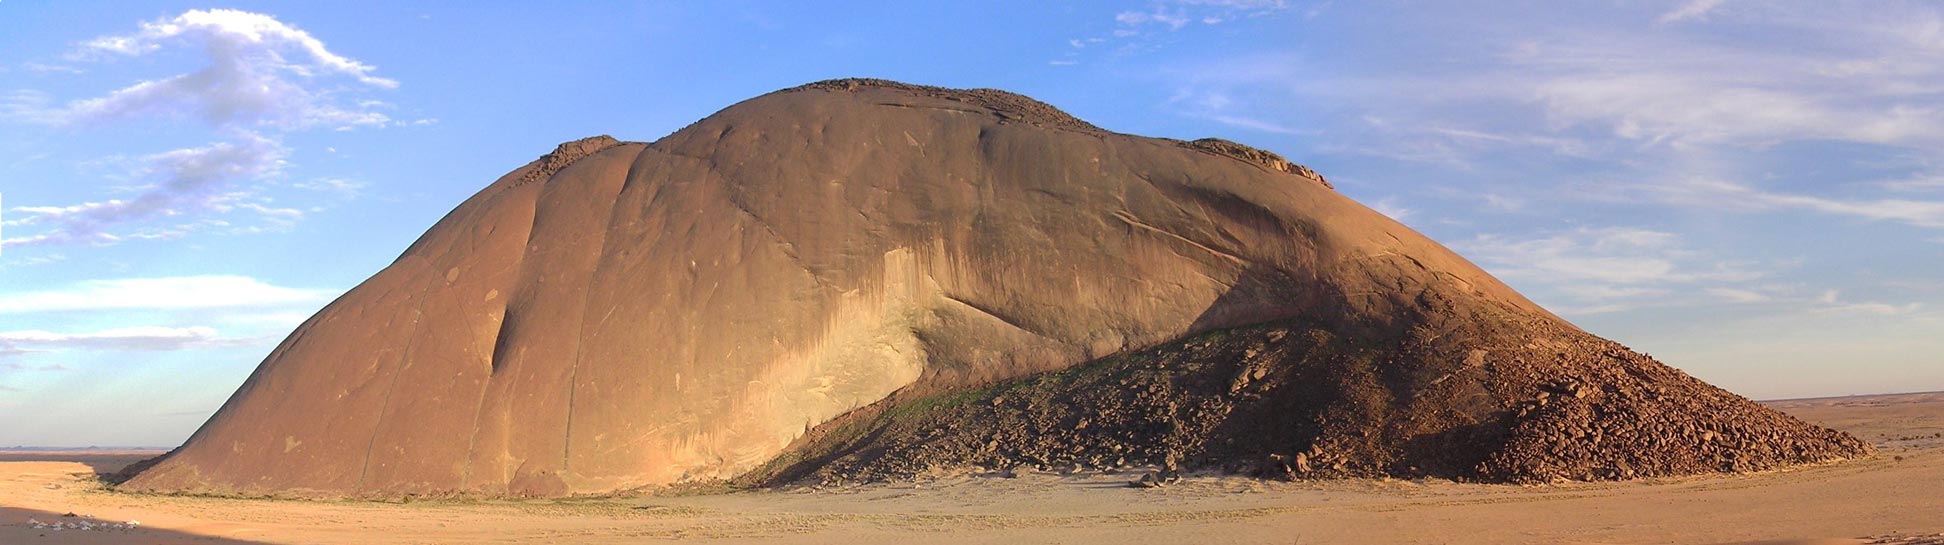 Ben Amera monolith Mauritania